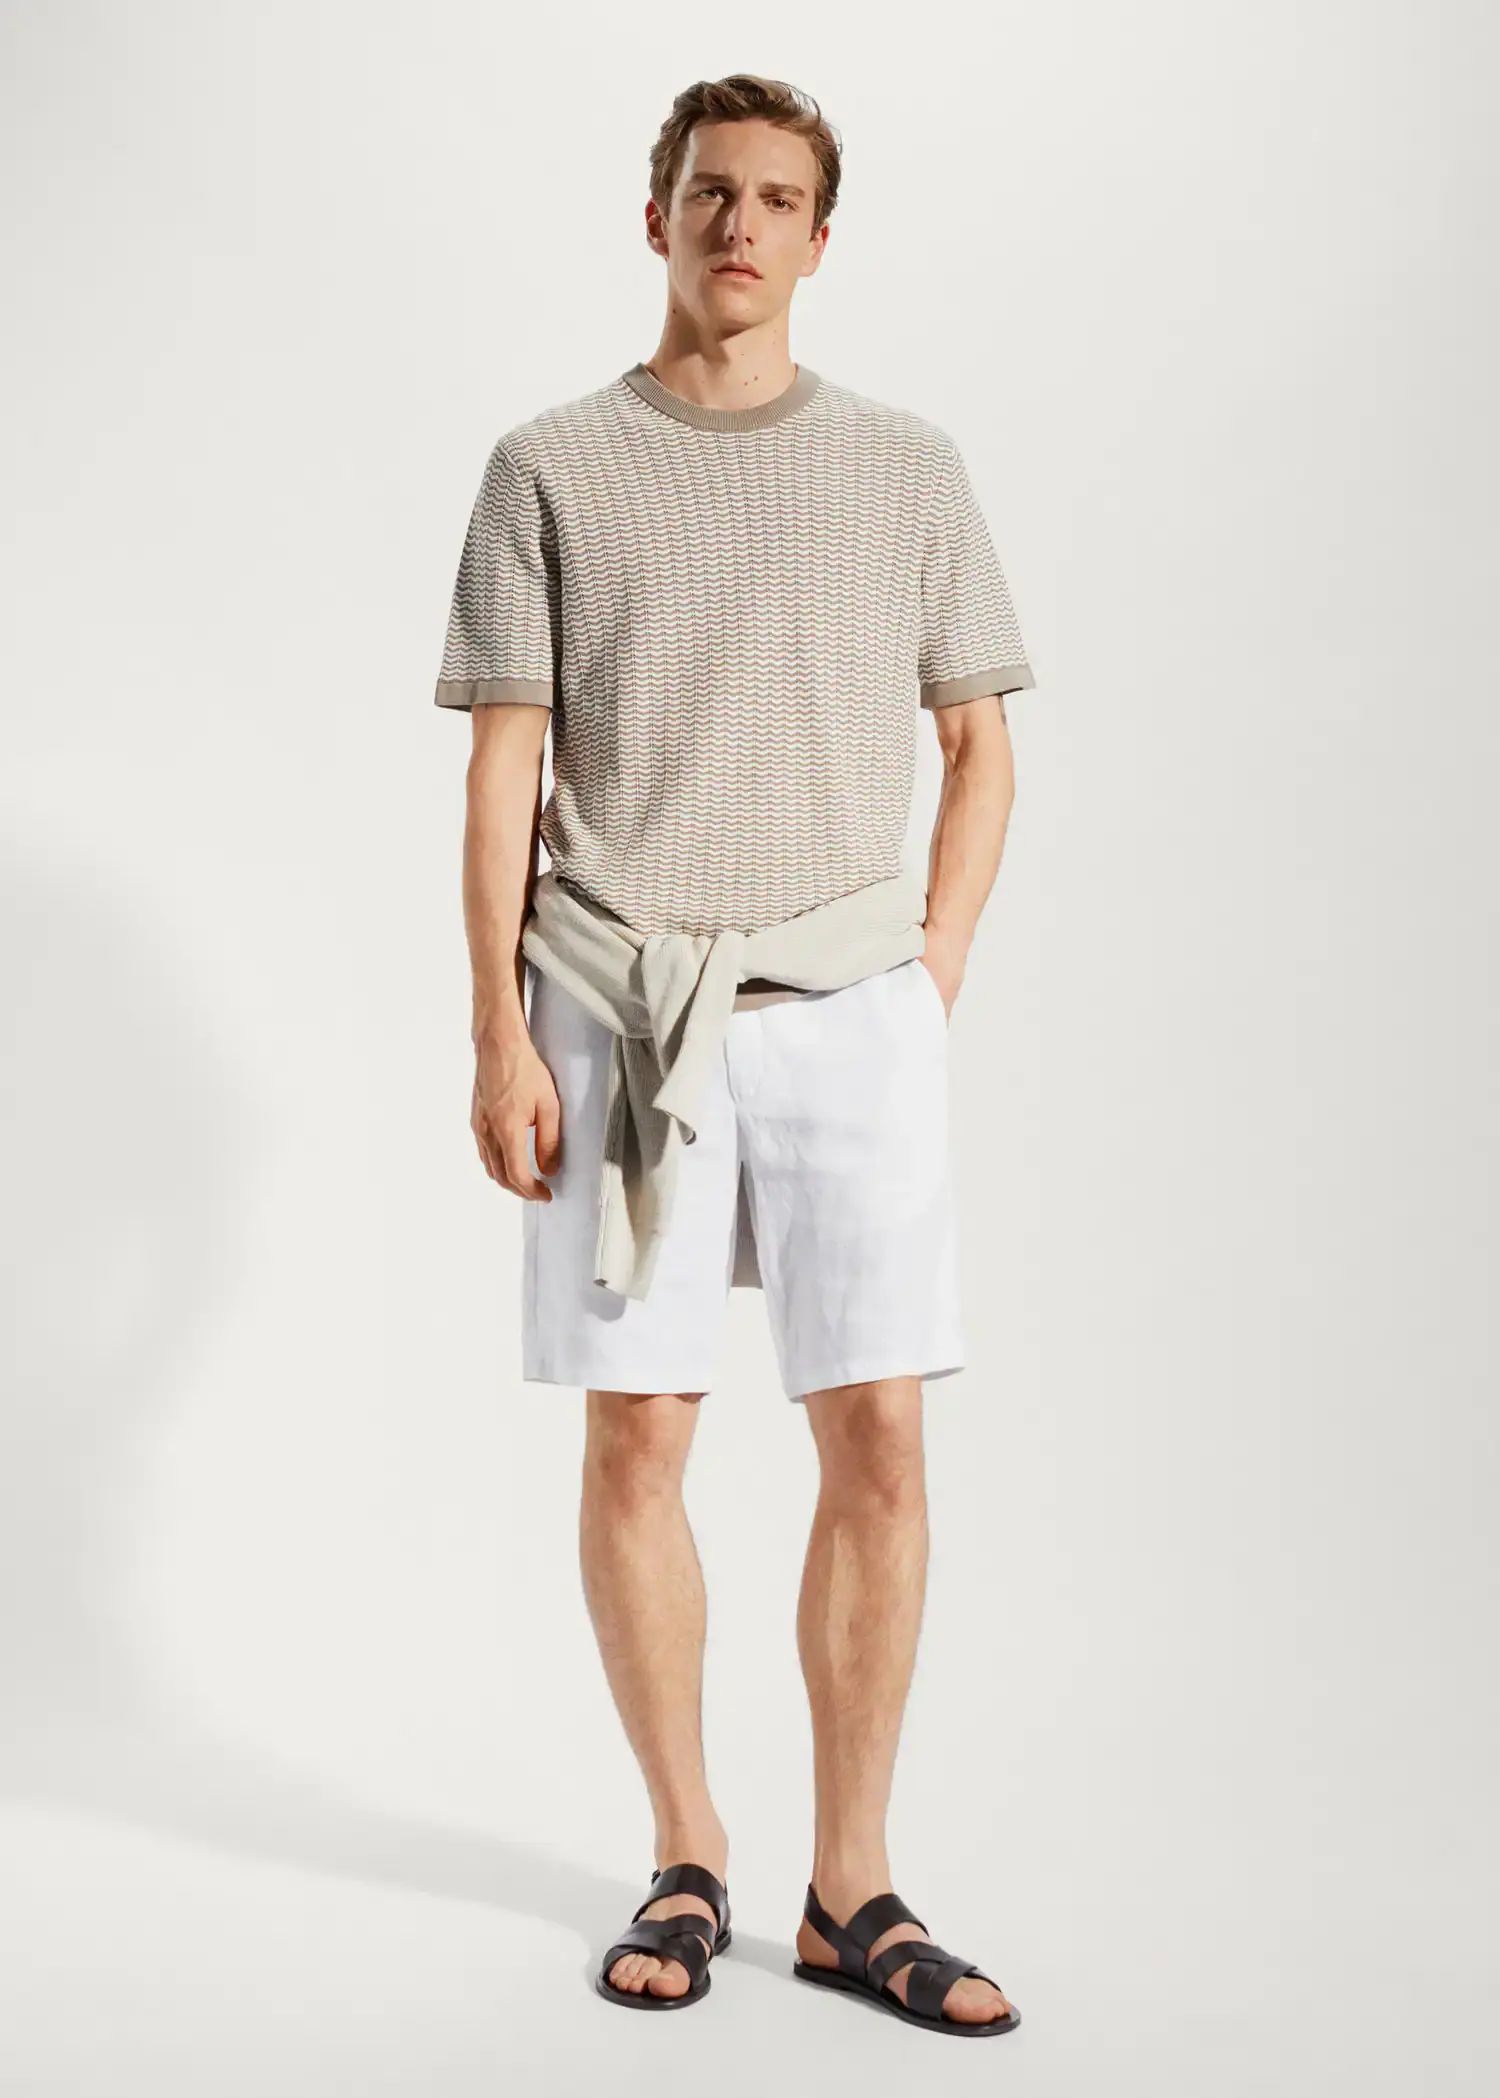 Mango 100% linen shorts. a man in a tan shirt and white shorts. 